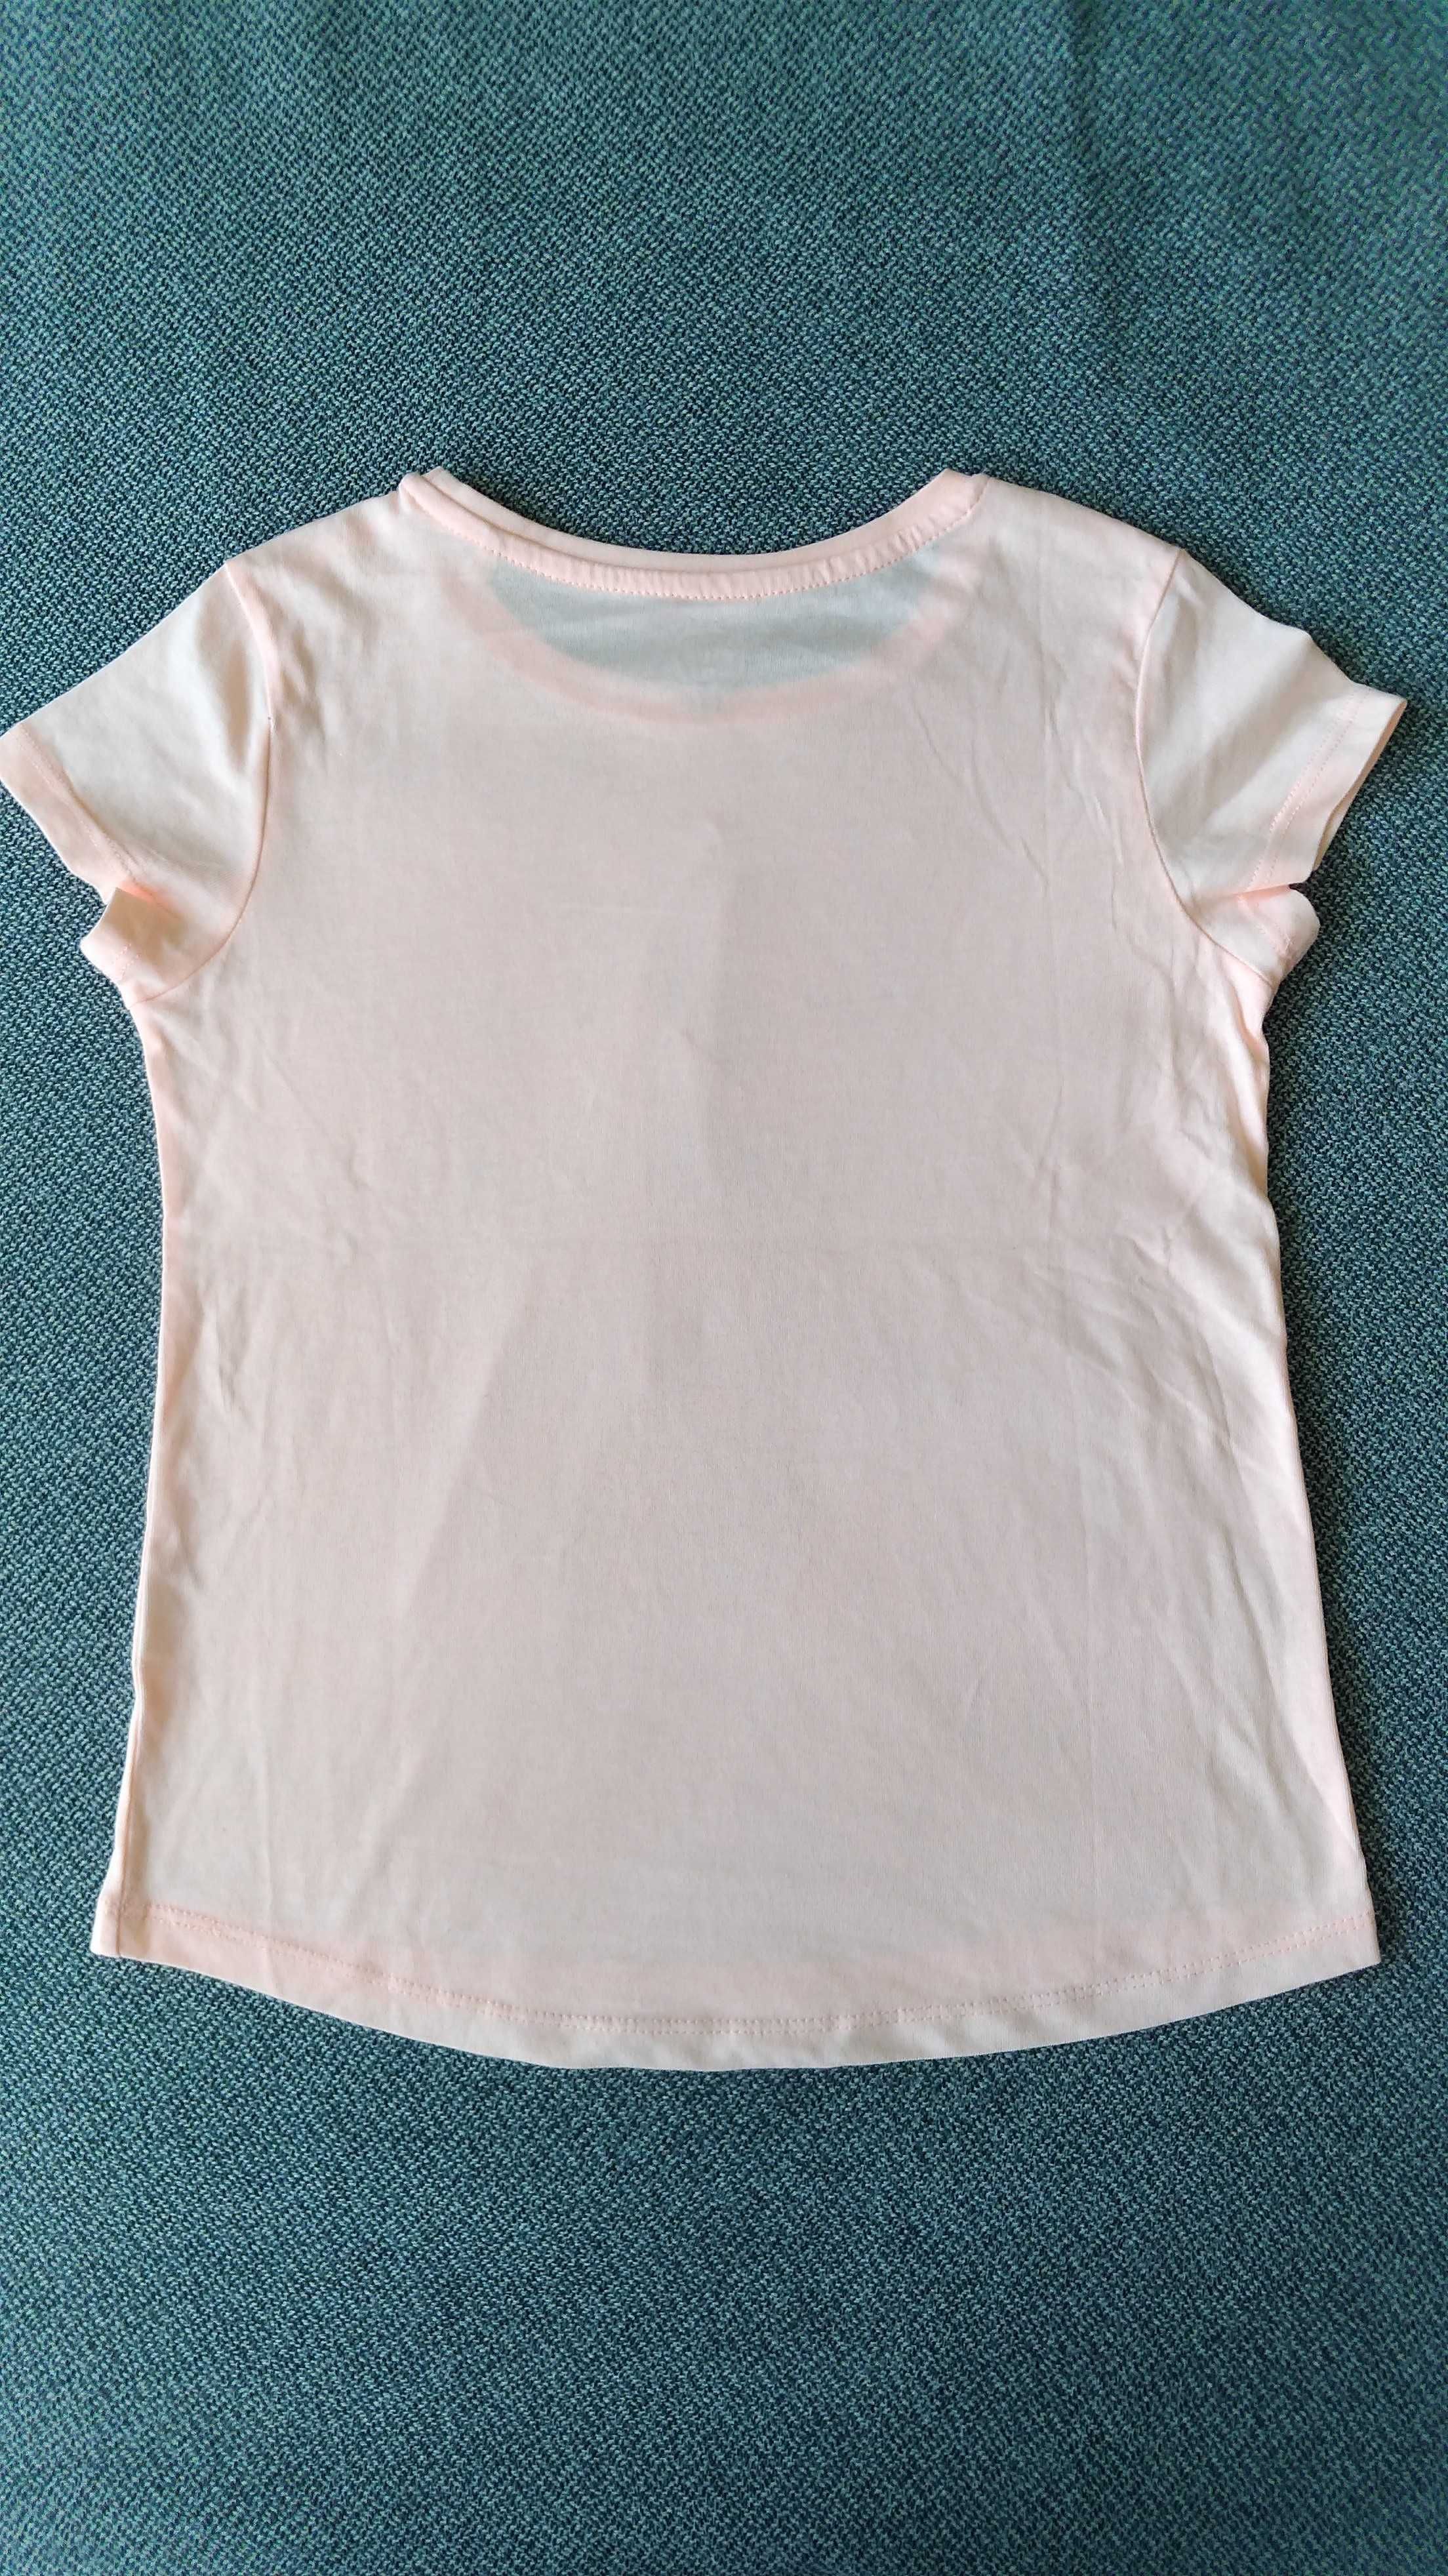 Koszulka T-shirt dziewczęca COOL CLUB r.134